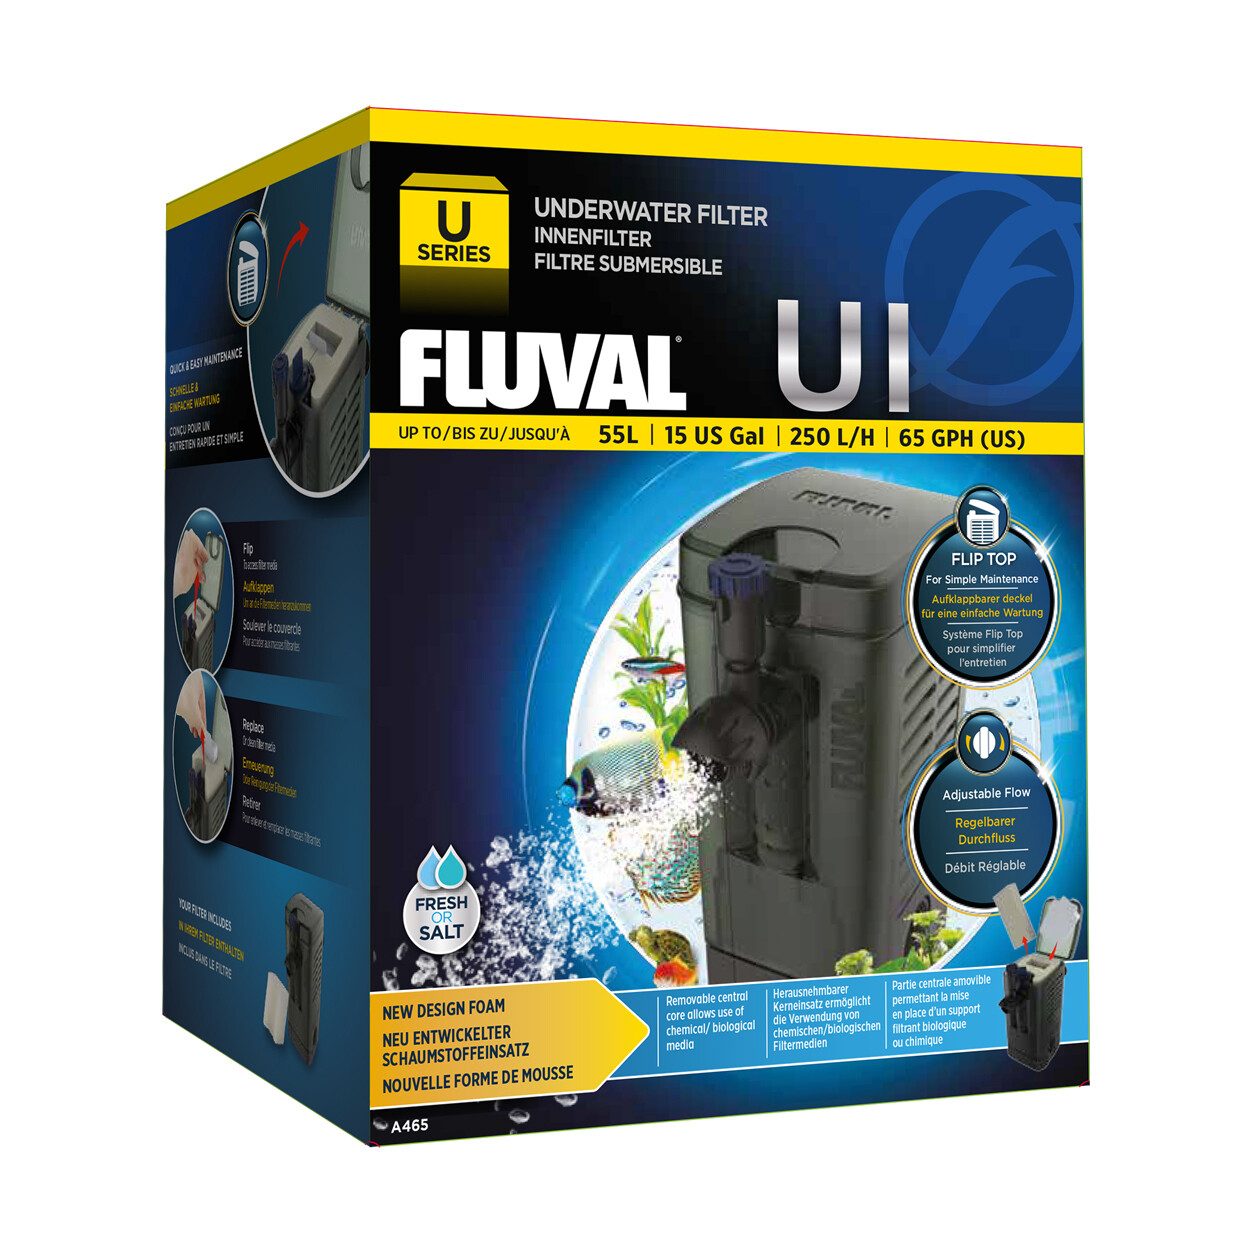 FLUVAL U1 UNDERWATER FILTER 15G.